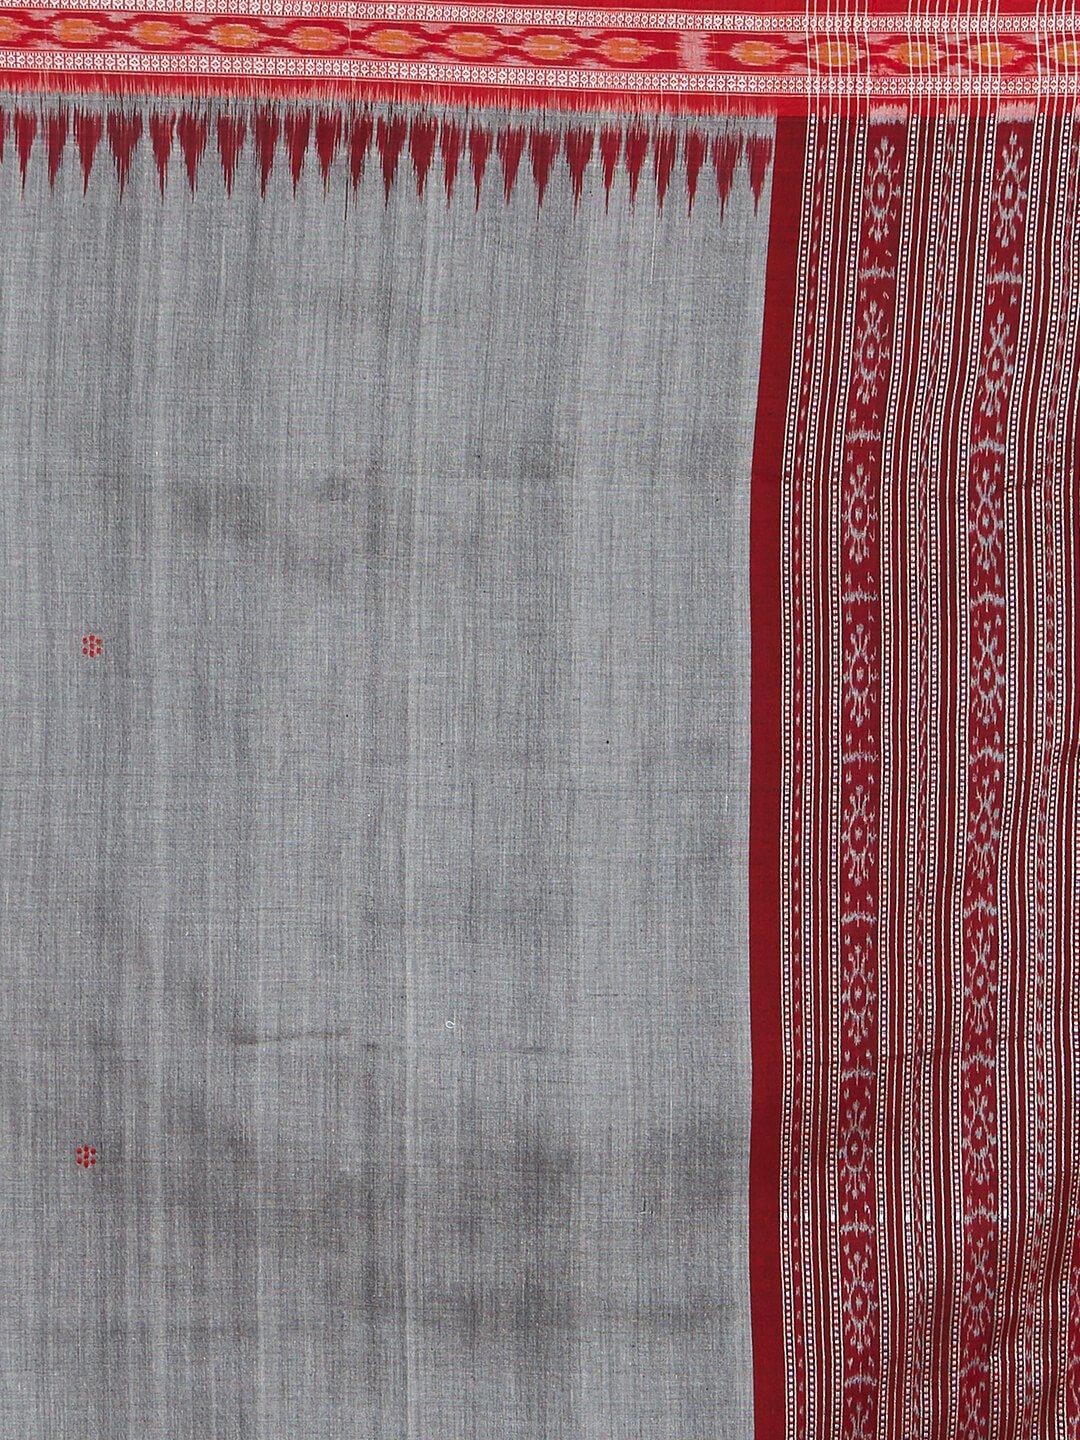 CraftsCollection.in - Grey and Red Cotton Sambalpuri Dupatta